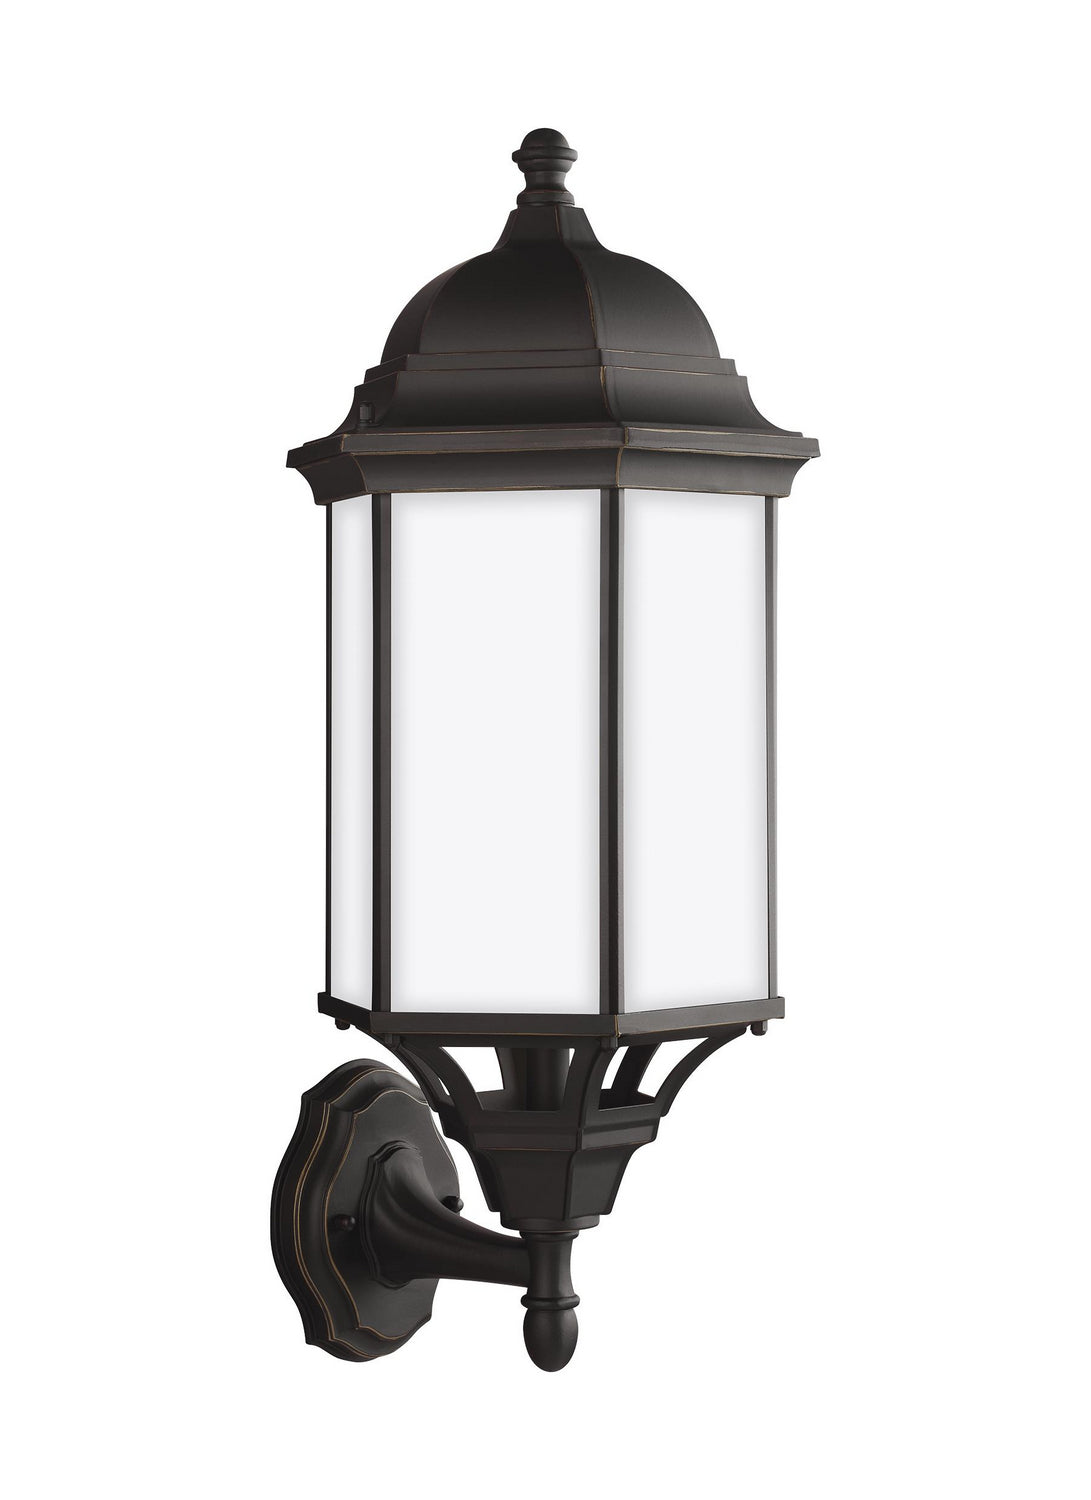 Generation Lighting Canada. - One Light Outdoor Wall Lantern - Sevier - Antique Bronze- Union Lighting Luminaires Decor